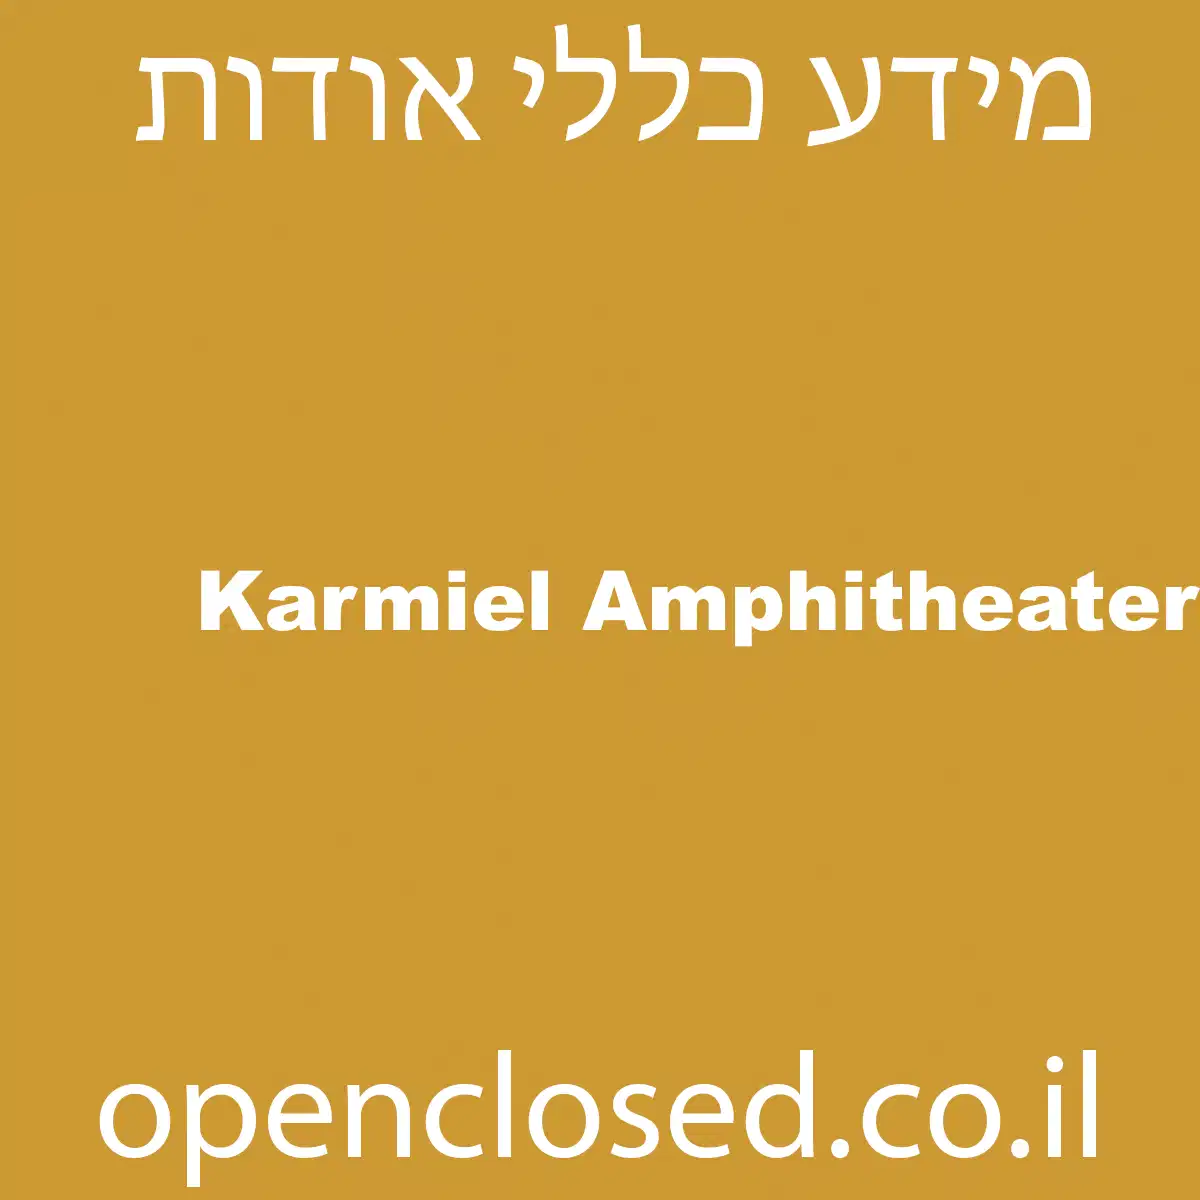 Karmiel Amphitheater